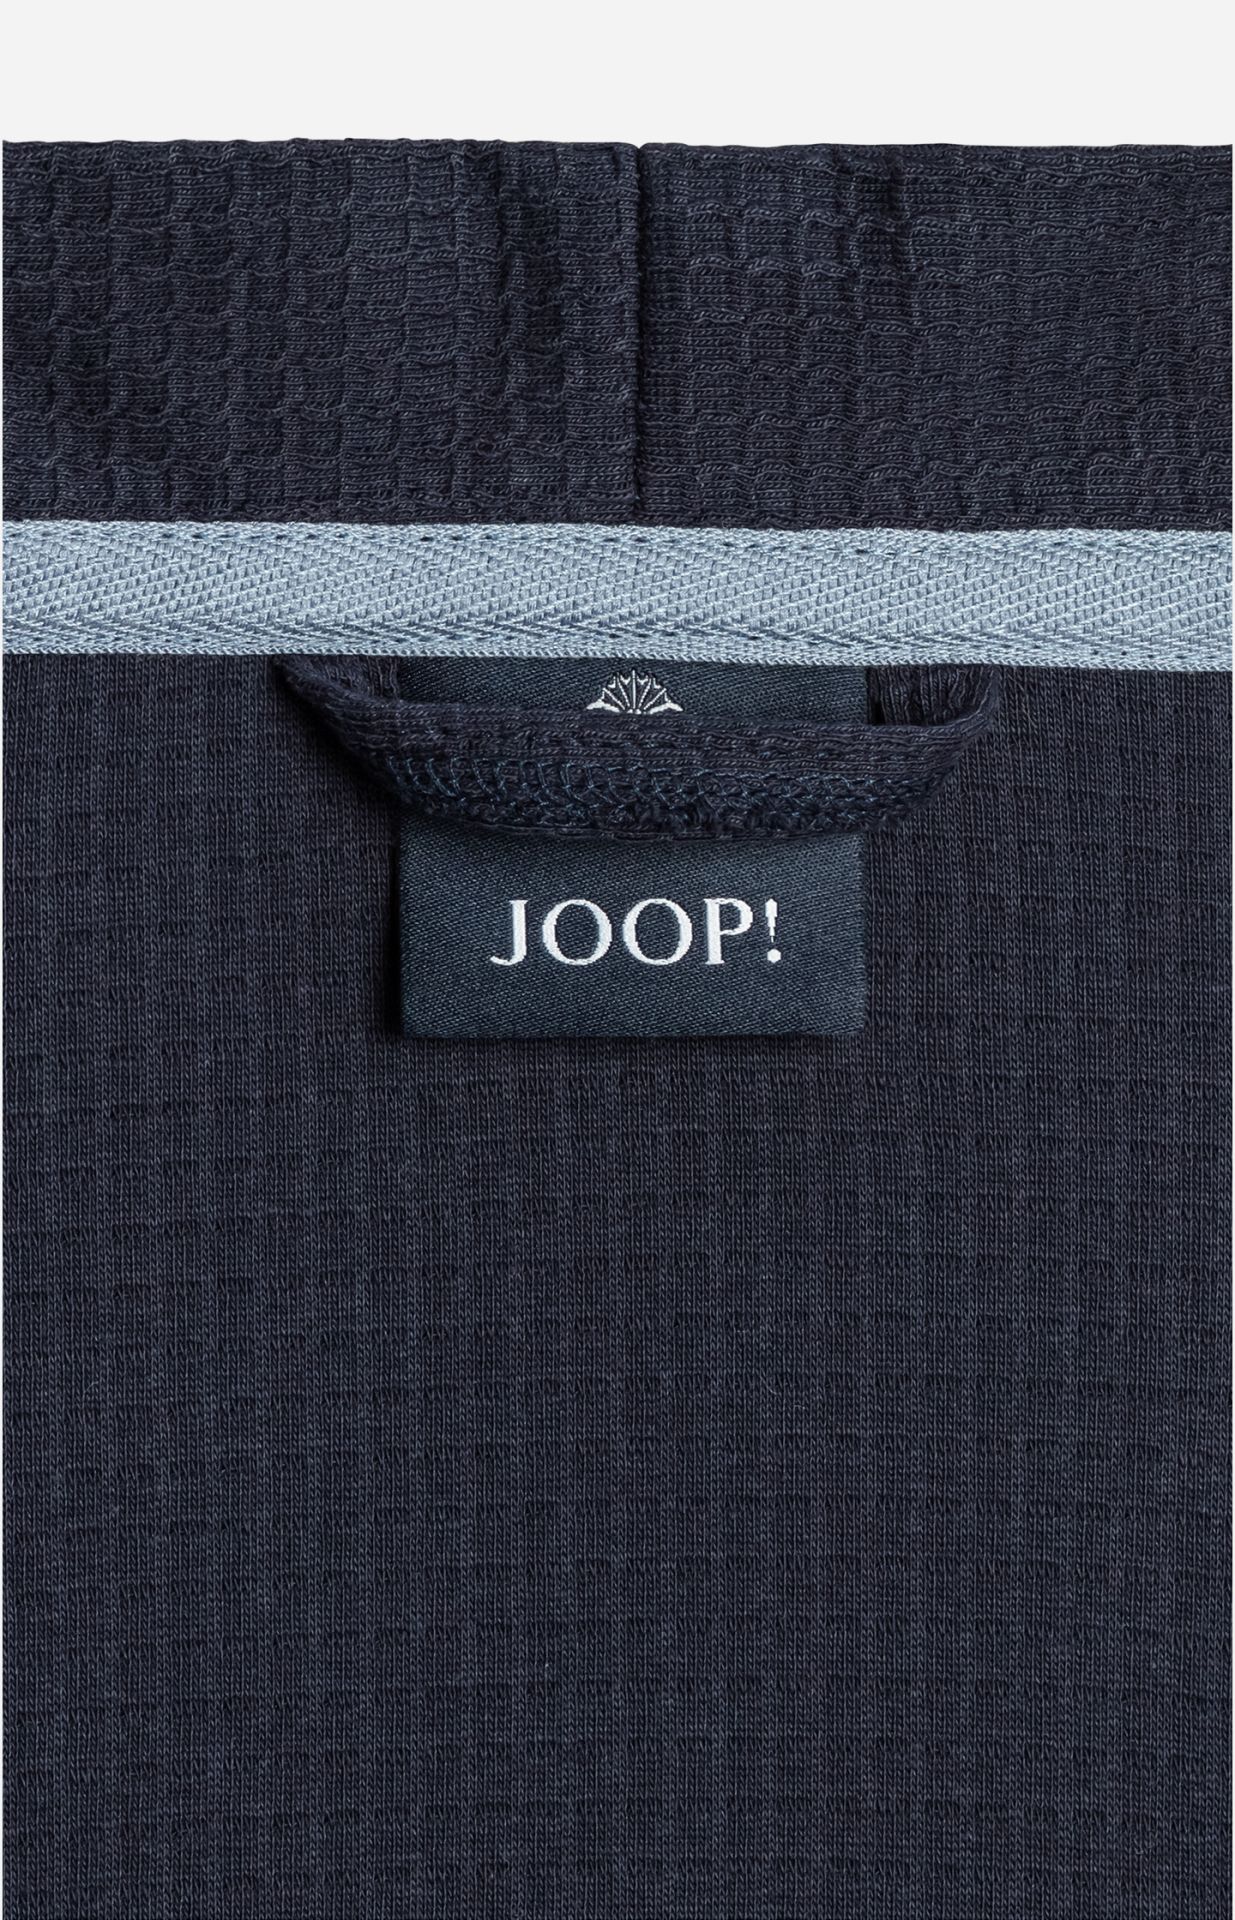 JOOP! Bademantel Uni Pique Herren-Kimono Gr.56 blau